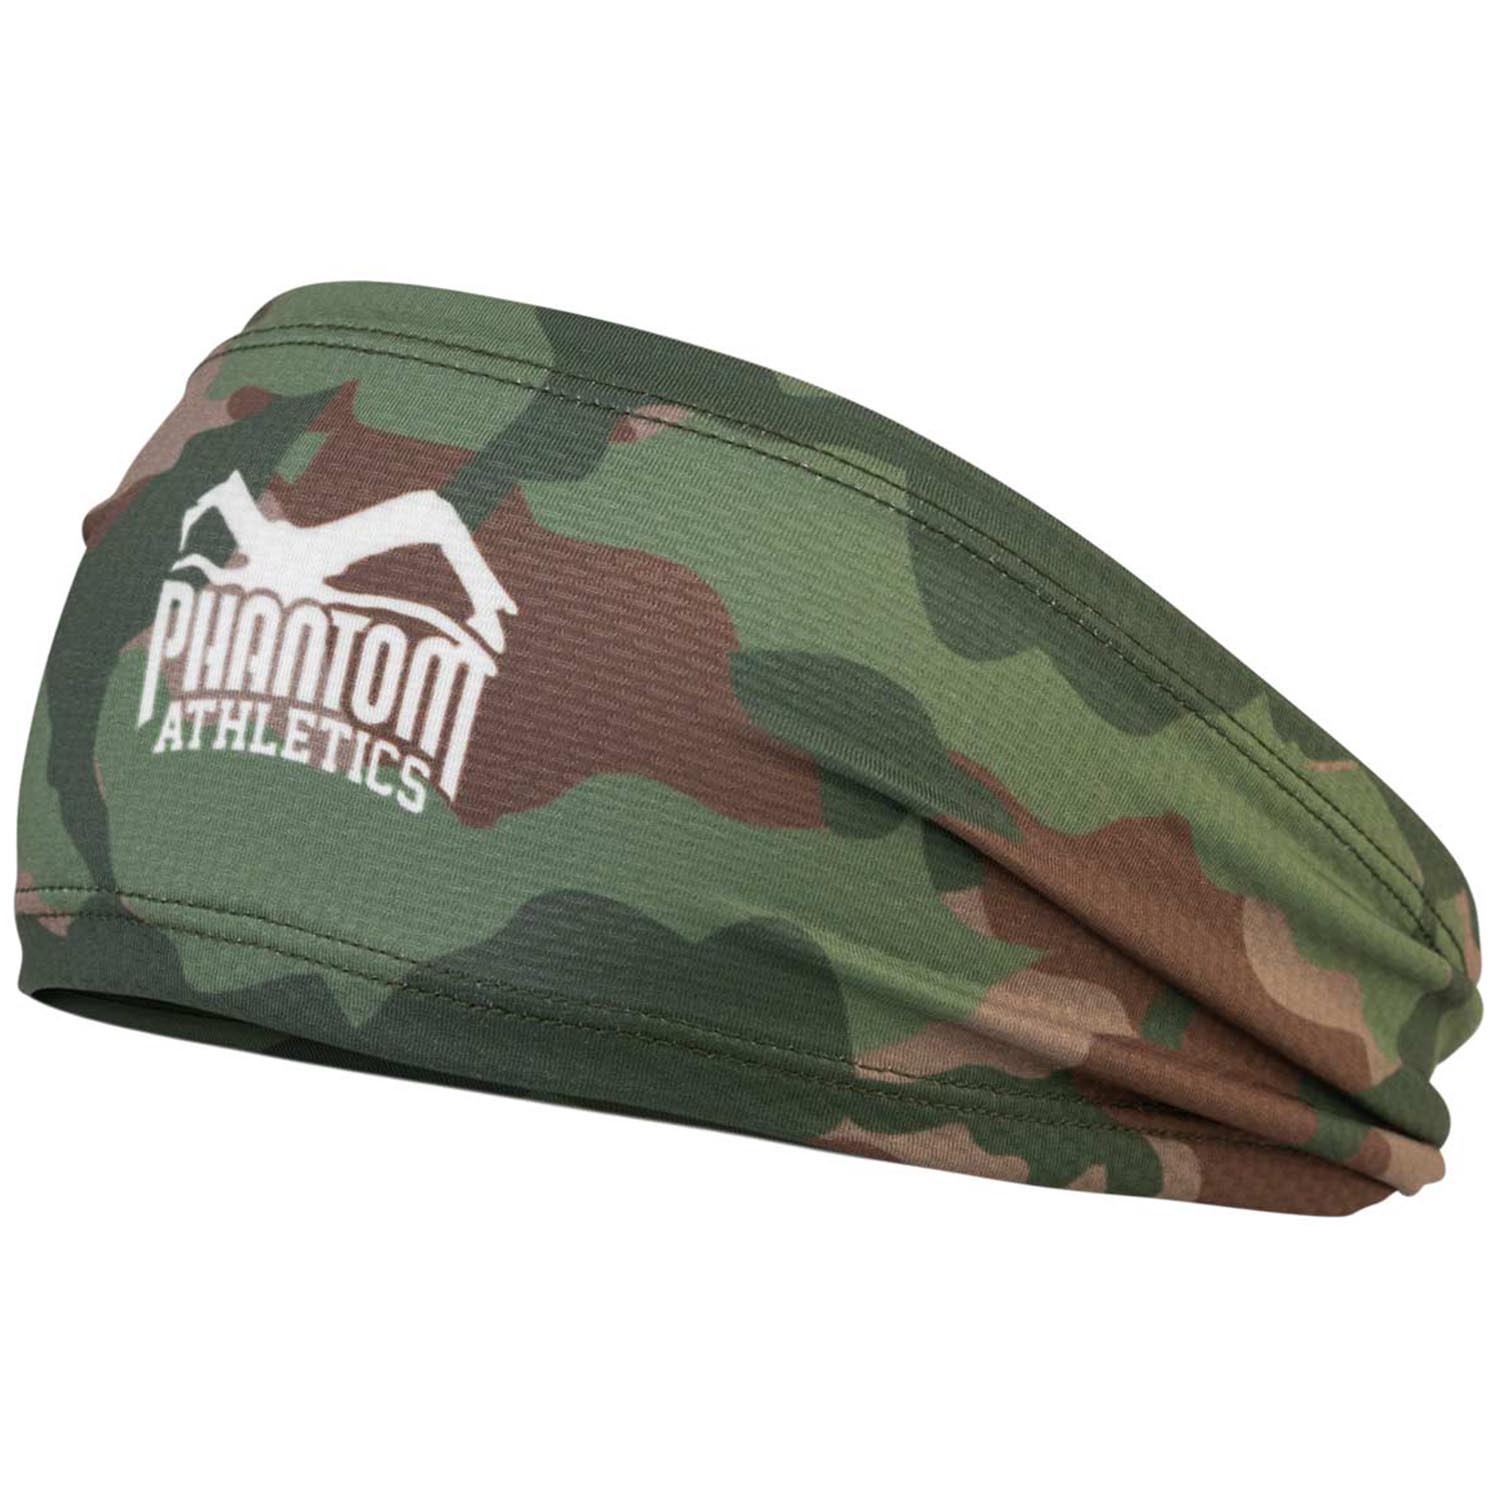 Phantom Athletics Headband, Team, camo-olive